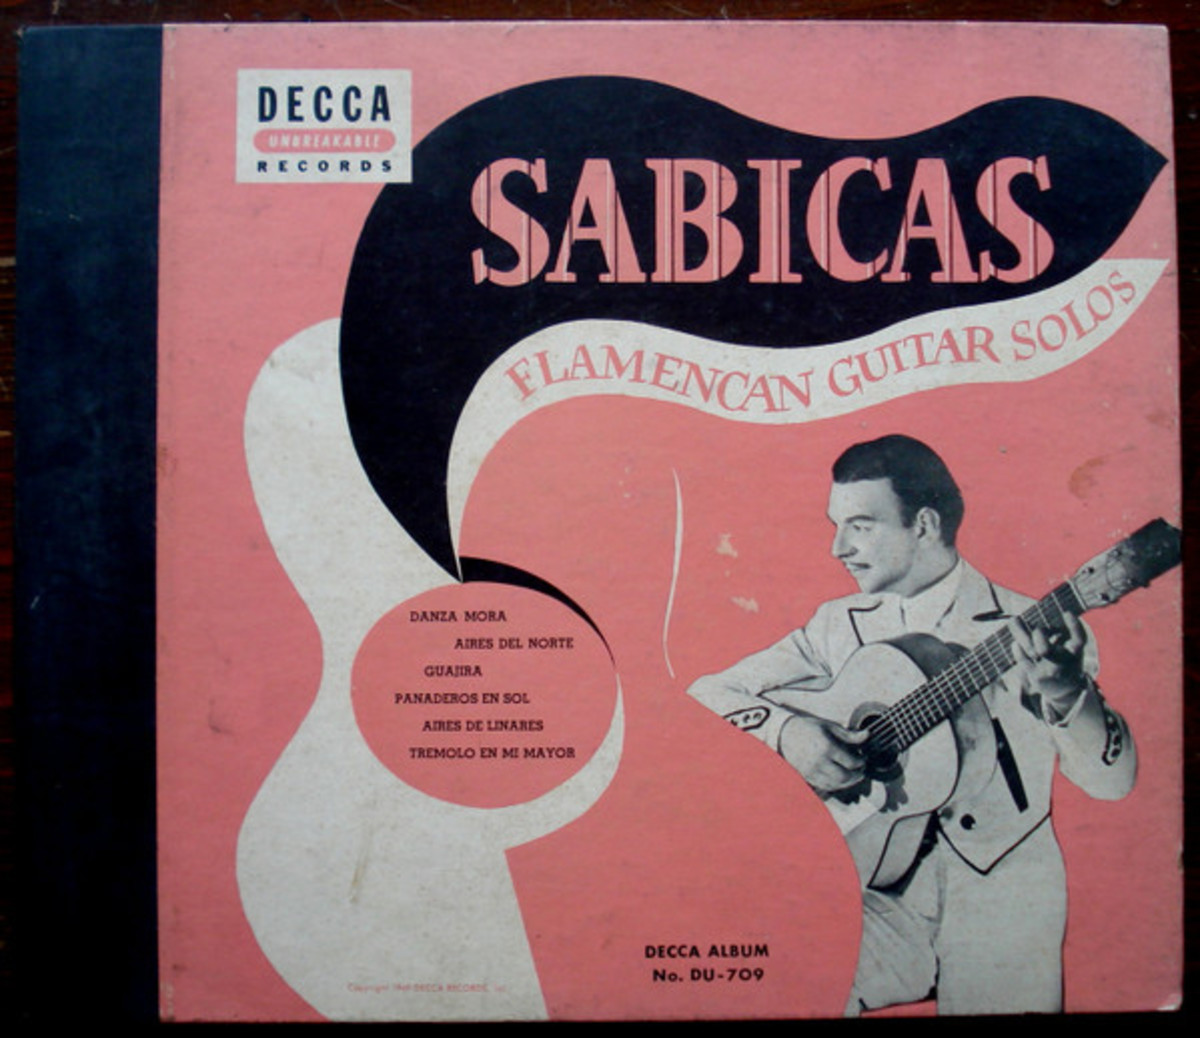 Flamencan Guitar Solos from Sabicas